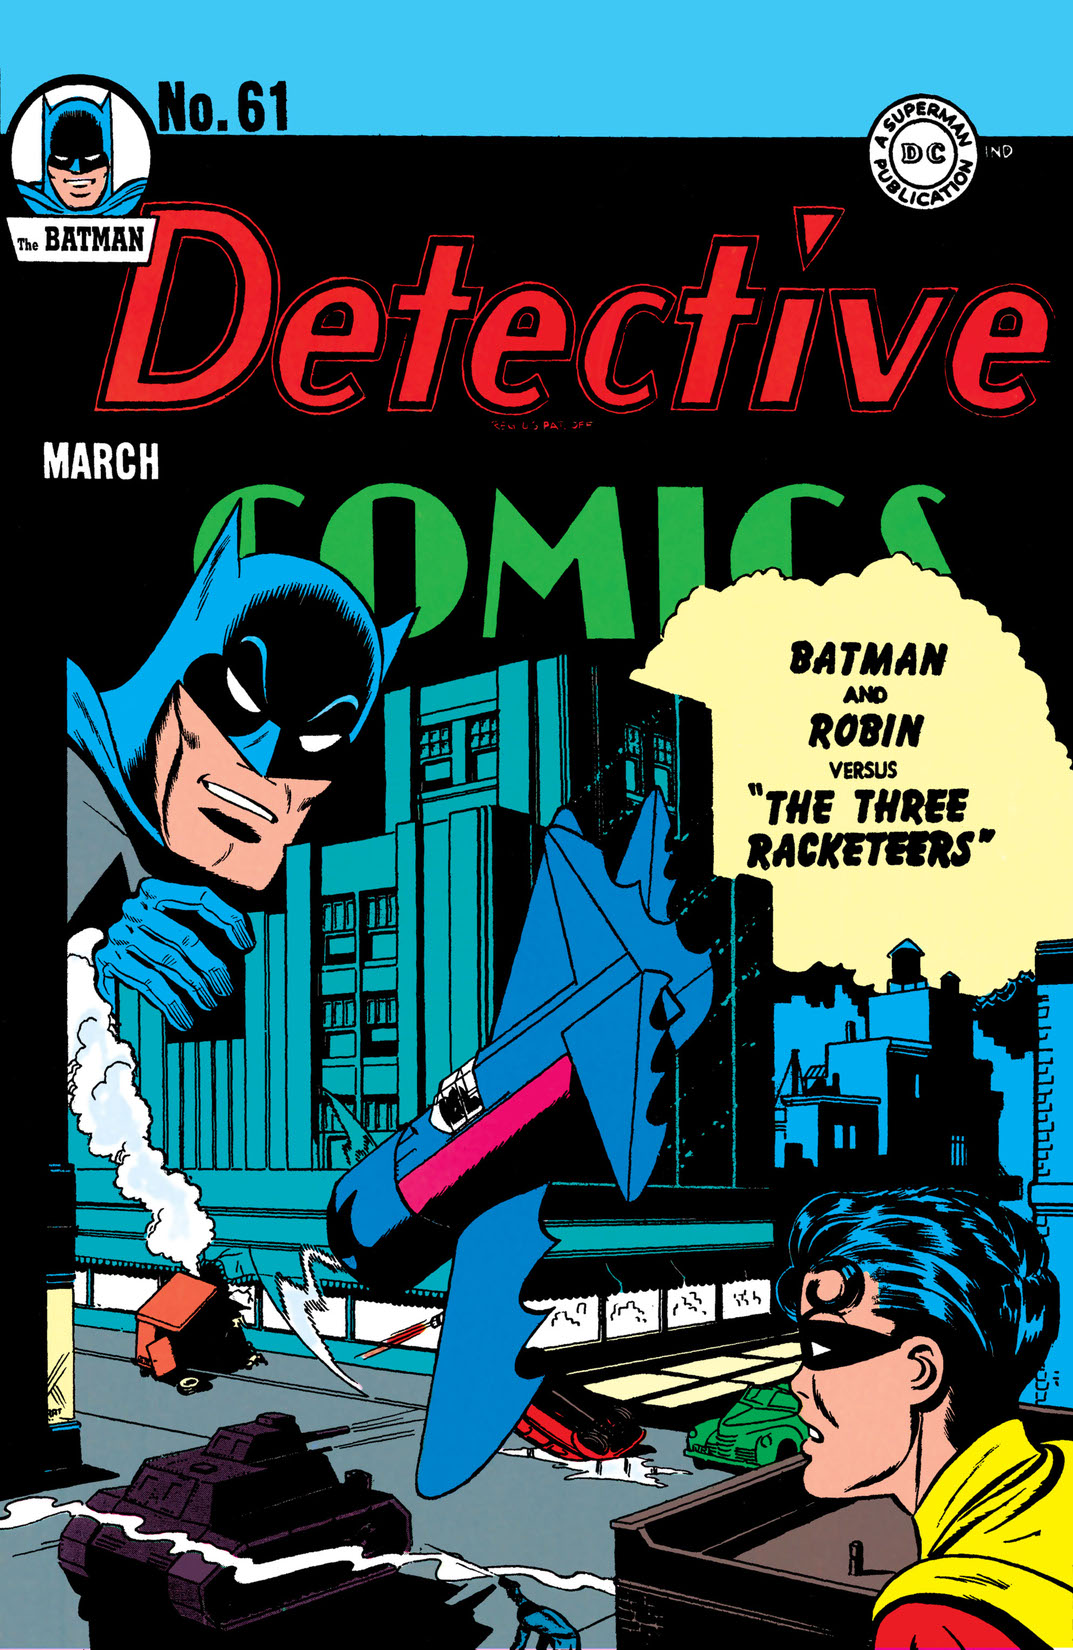 Detective Comics (1937-) #61 preview images